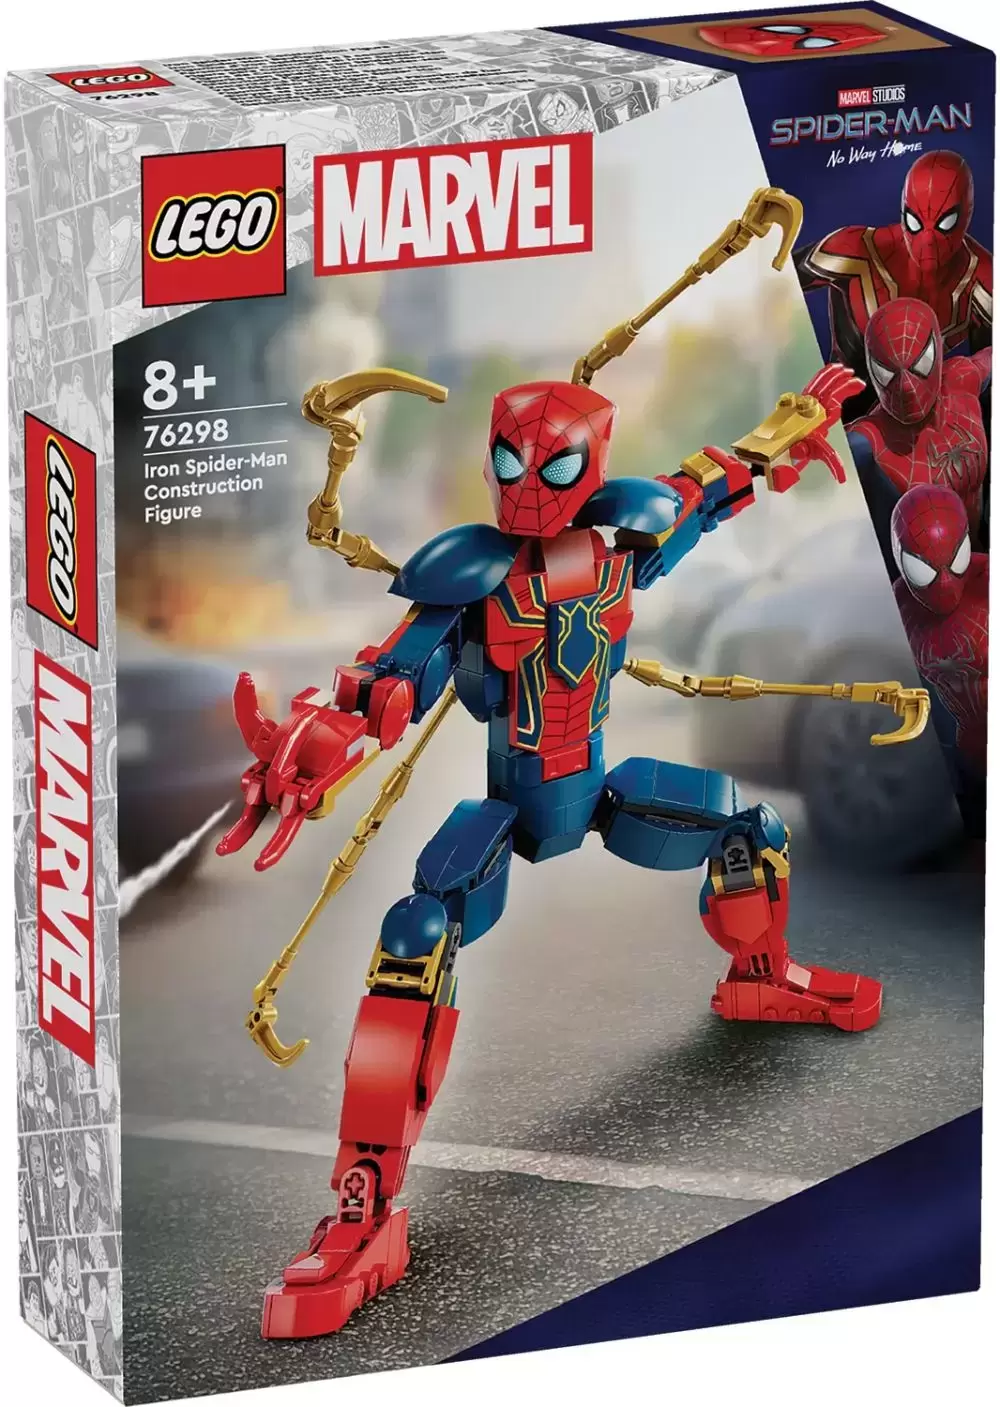 LEGO MARVEL Super Heroes - Iron Spider-Man Construction Figure